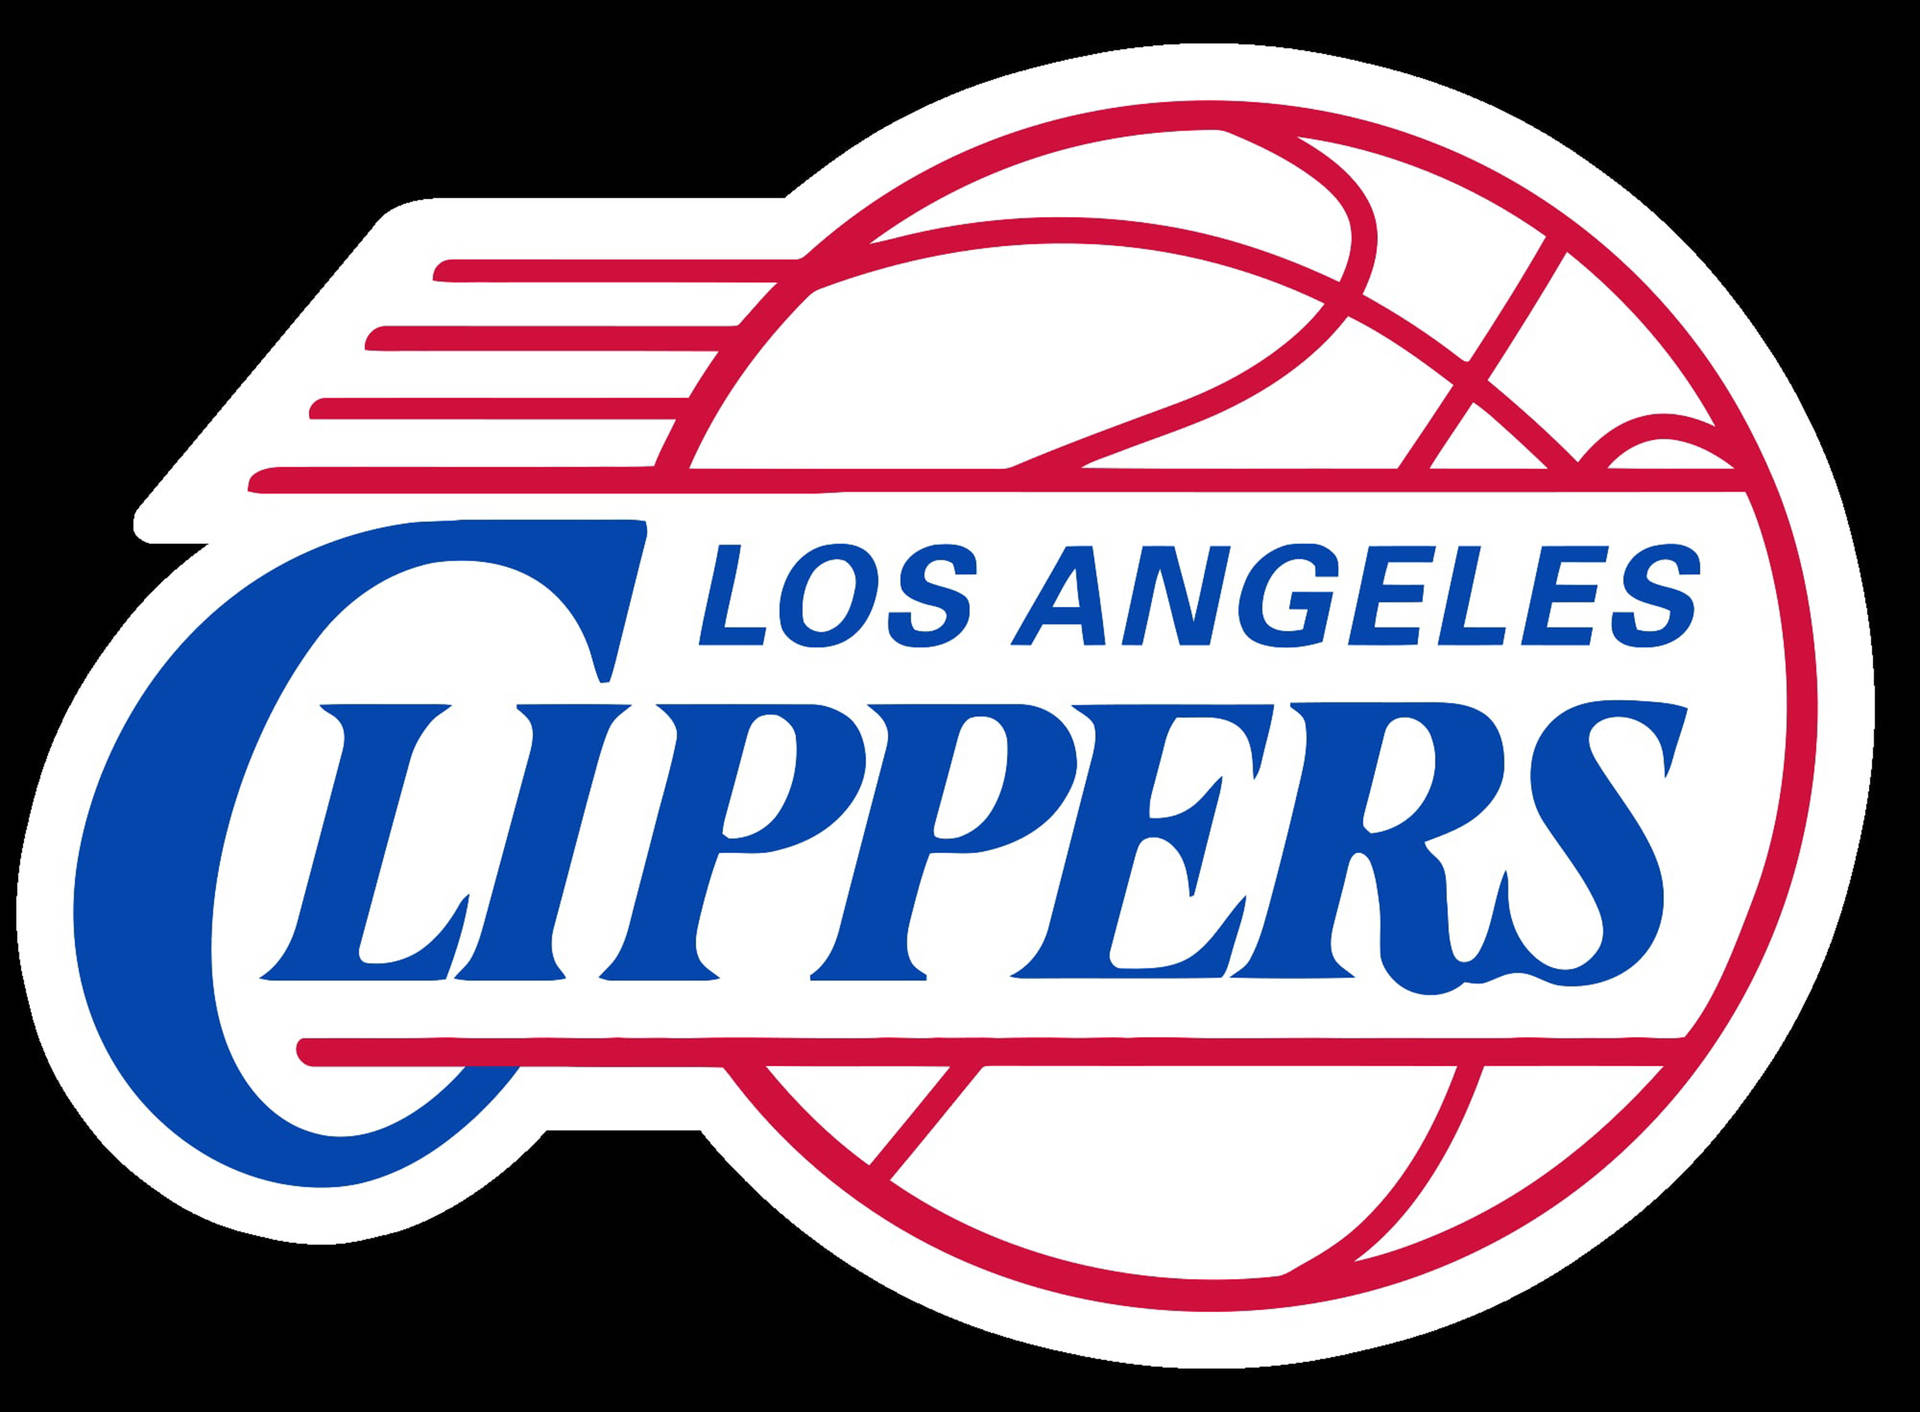 Losangeles Clippers 2010 Fondo Negro. Fondo de pantalla